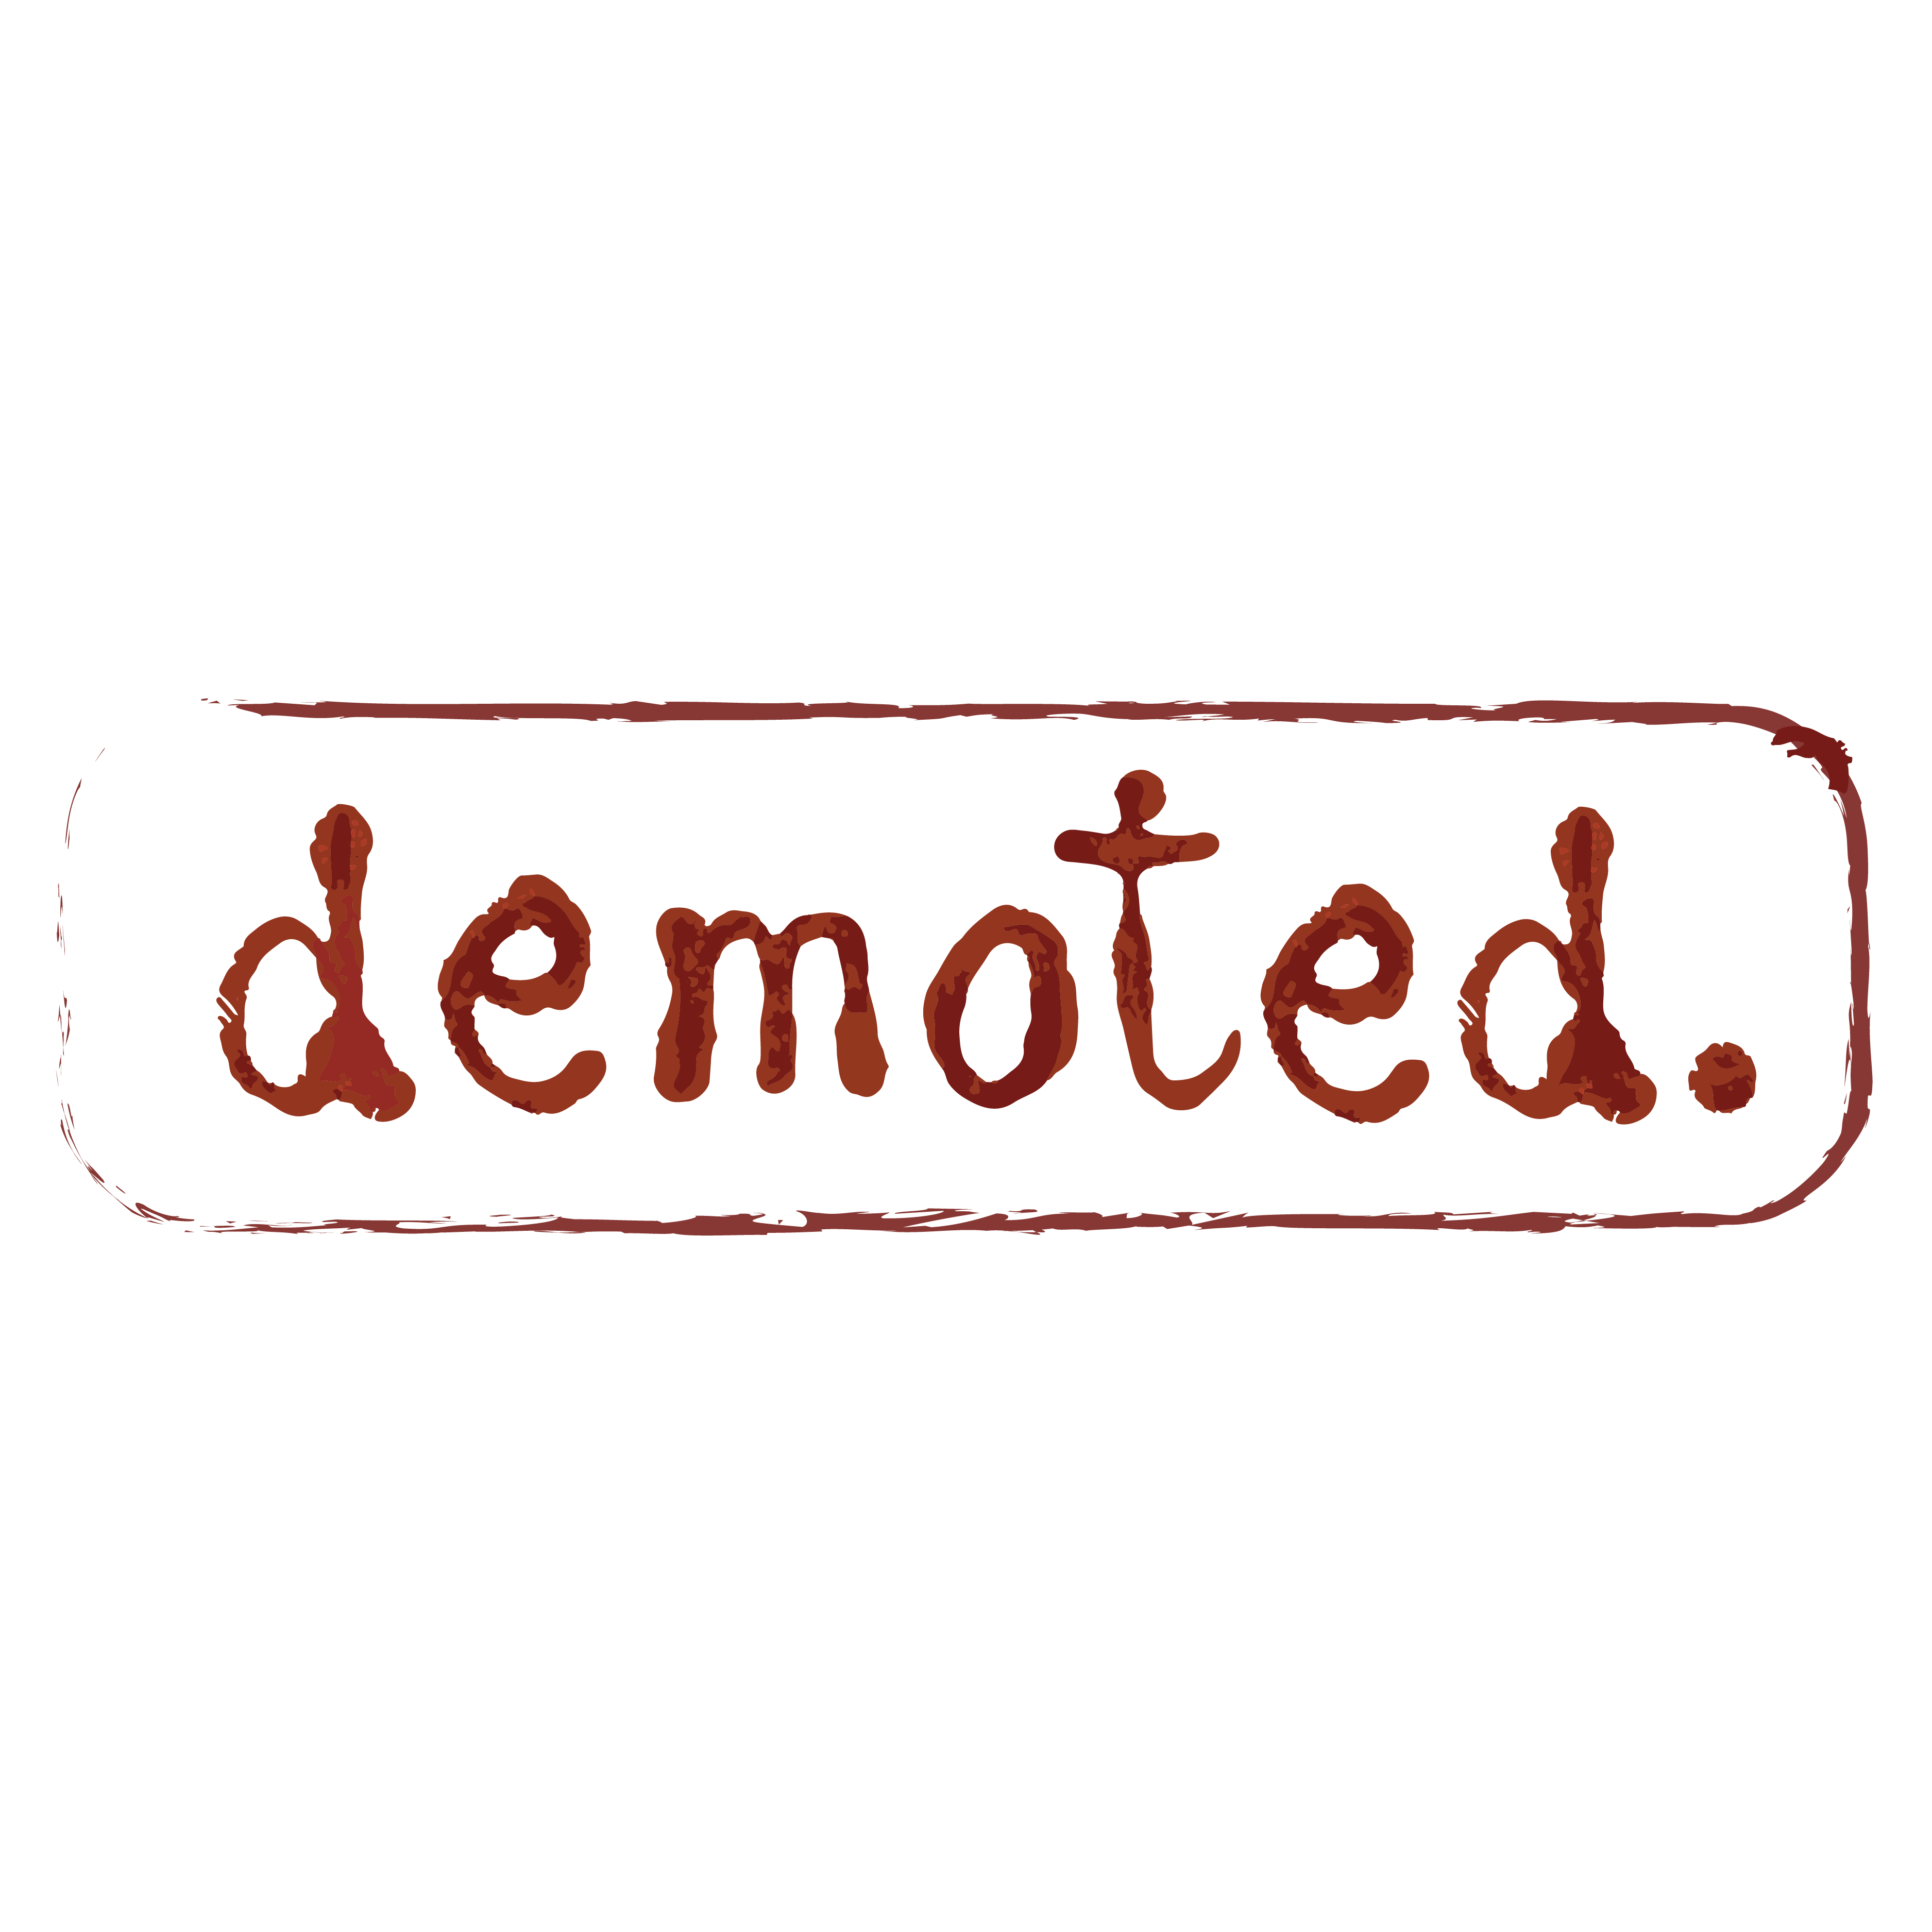 Demoted+Alt+Logo logo design by logo designer ESM+Creative+Studio+ for your inspiration and for the worlds largest logo competition